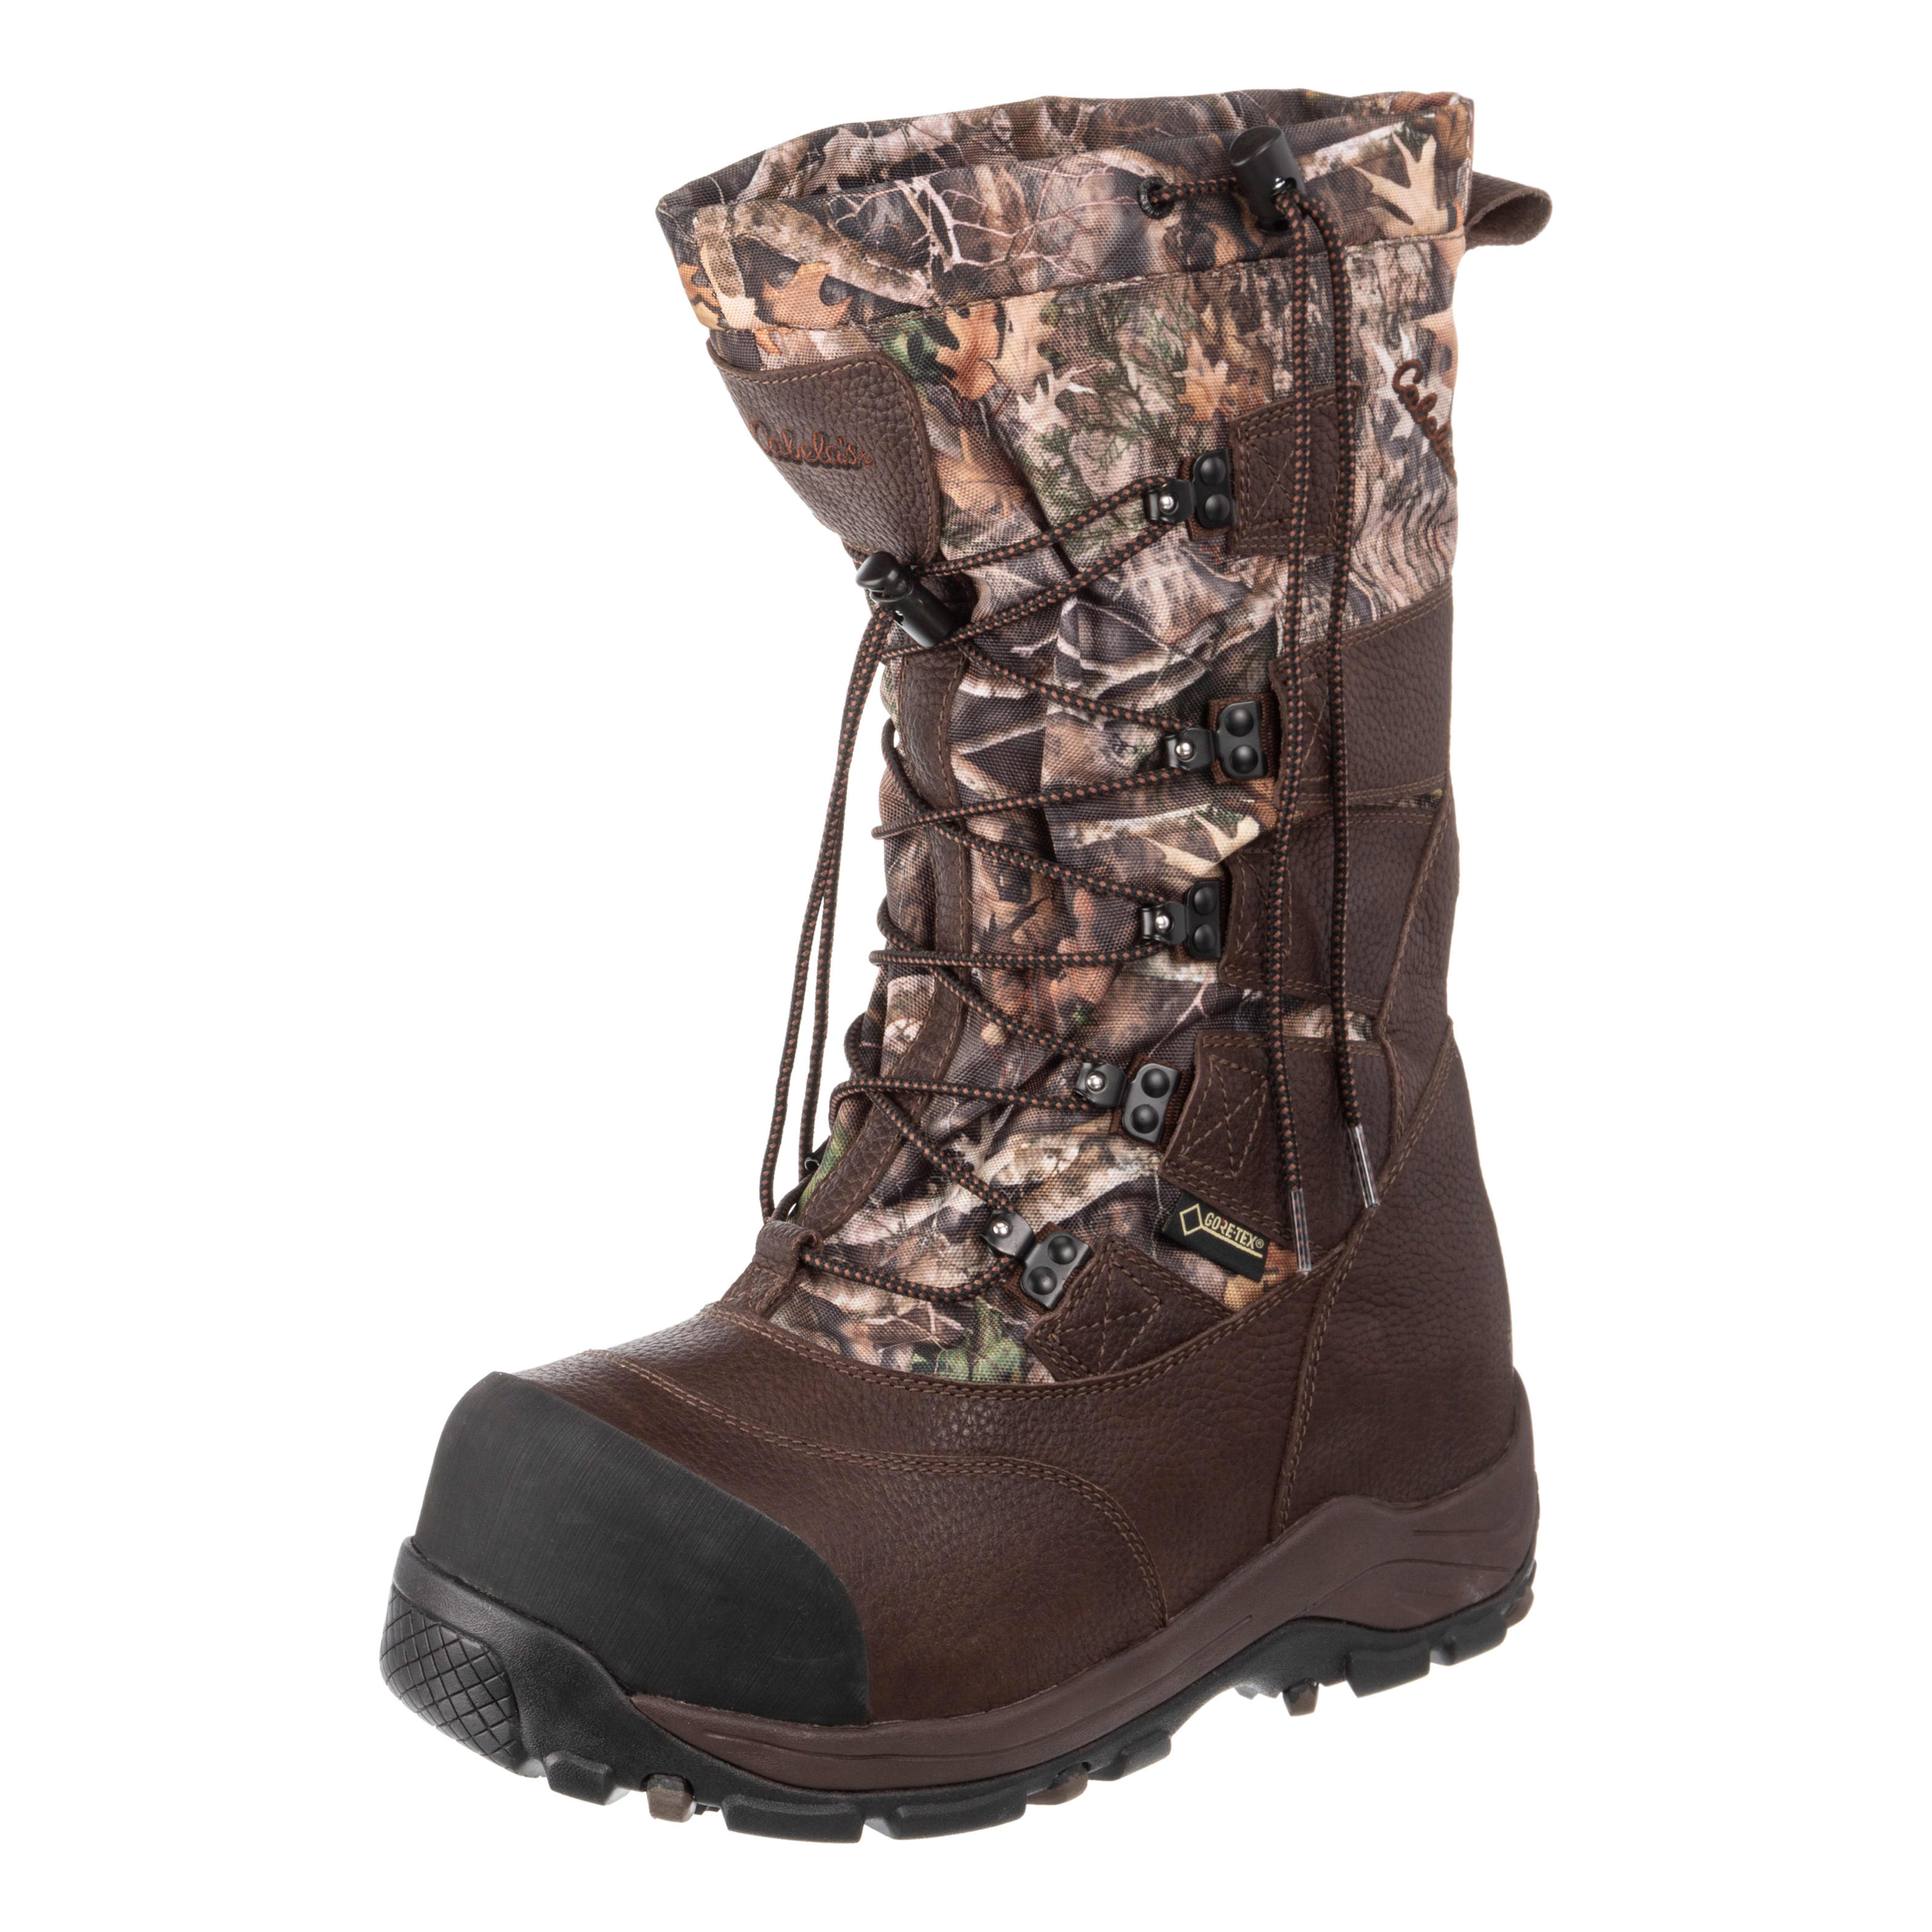 Cabela’s Men’s Saskatchewan GORE-TEX® Insulated Hunting Boots